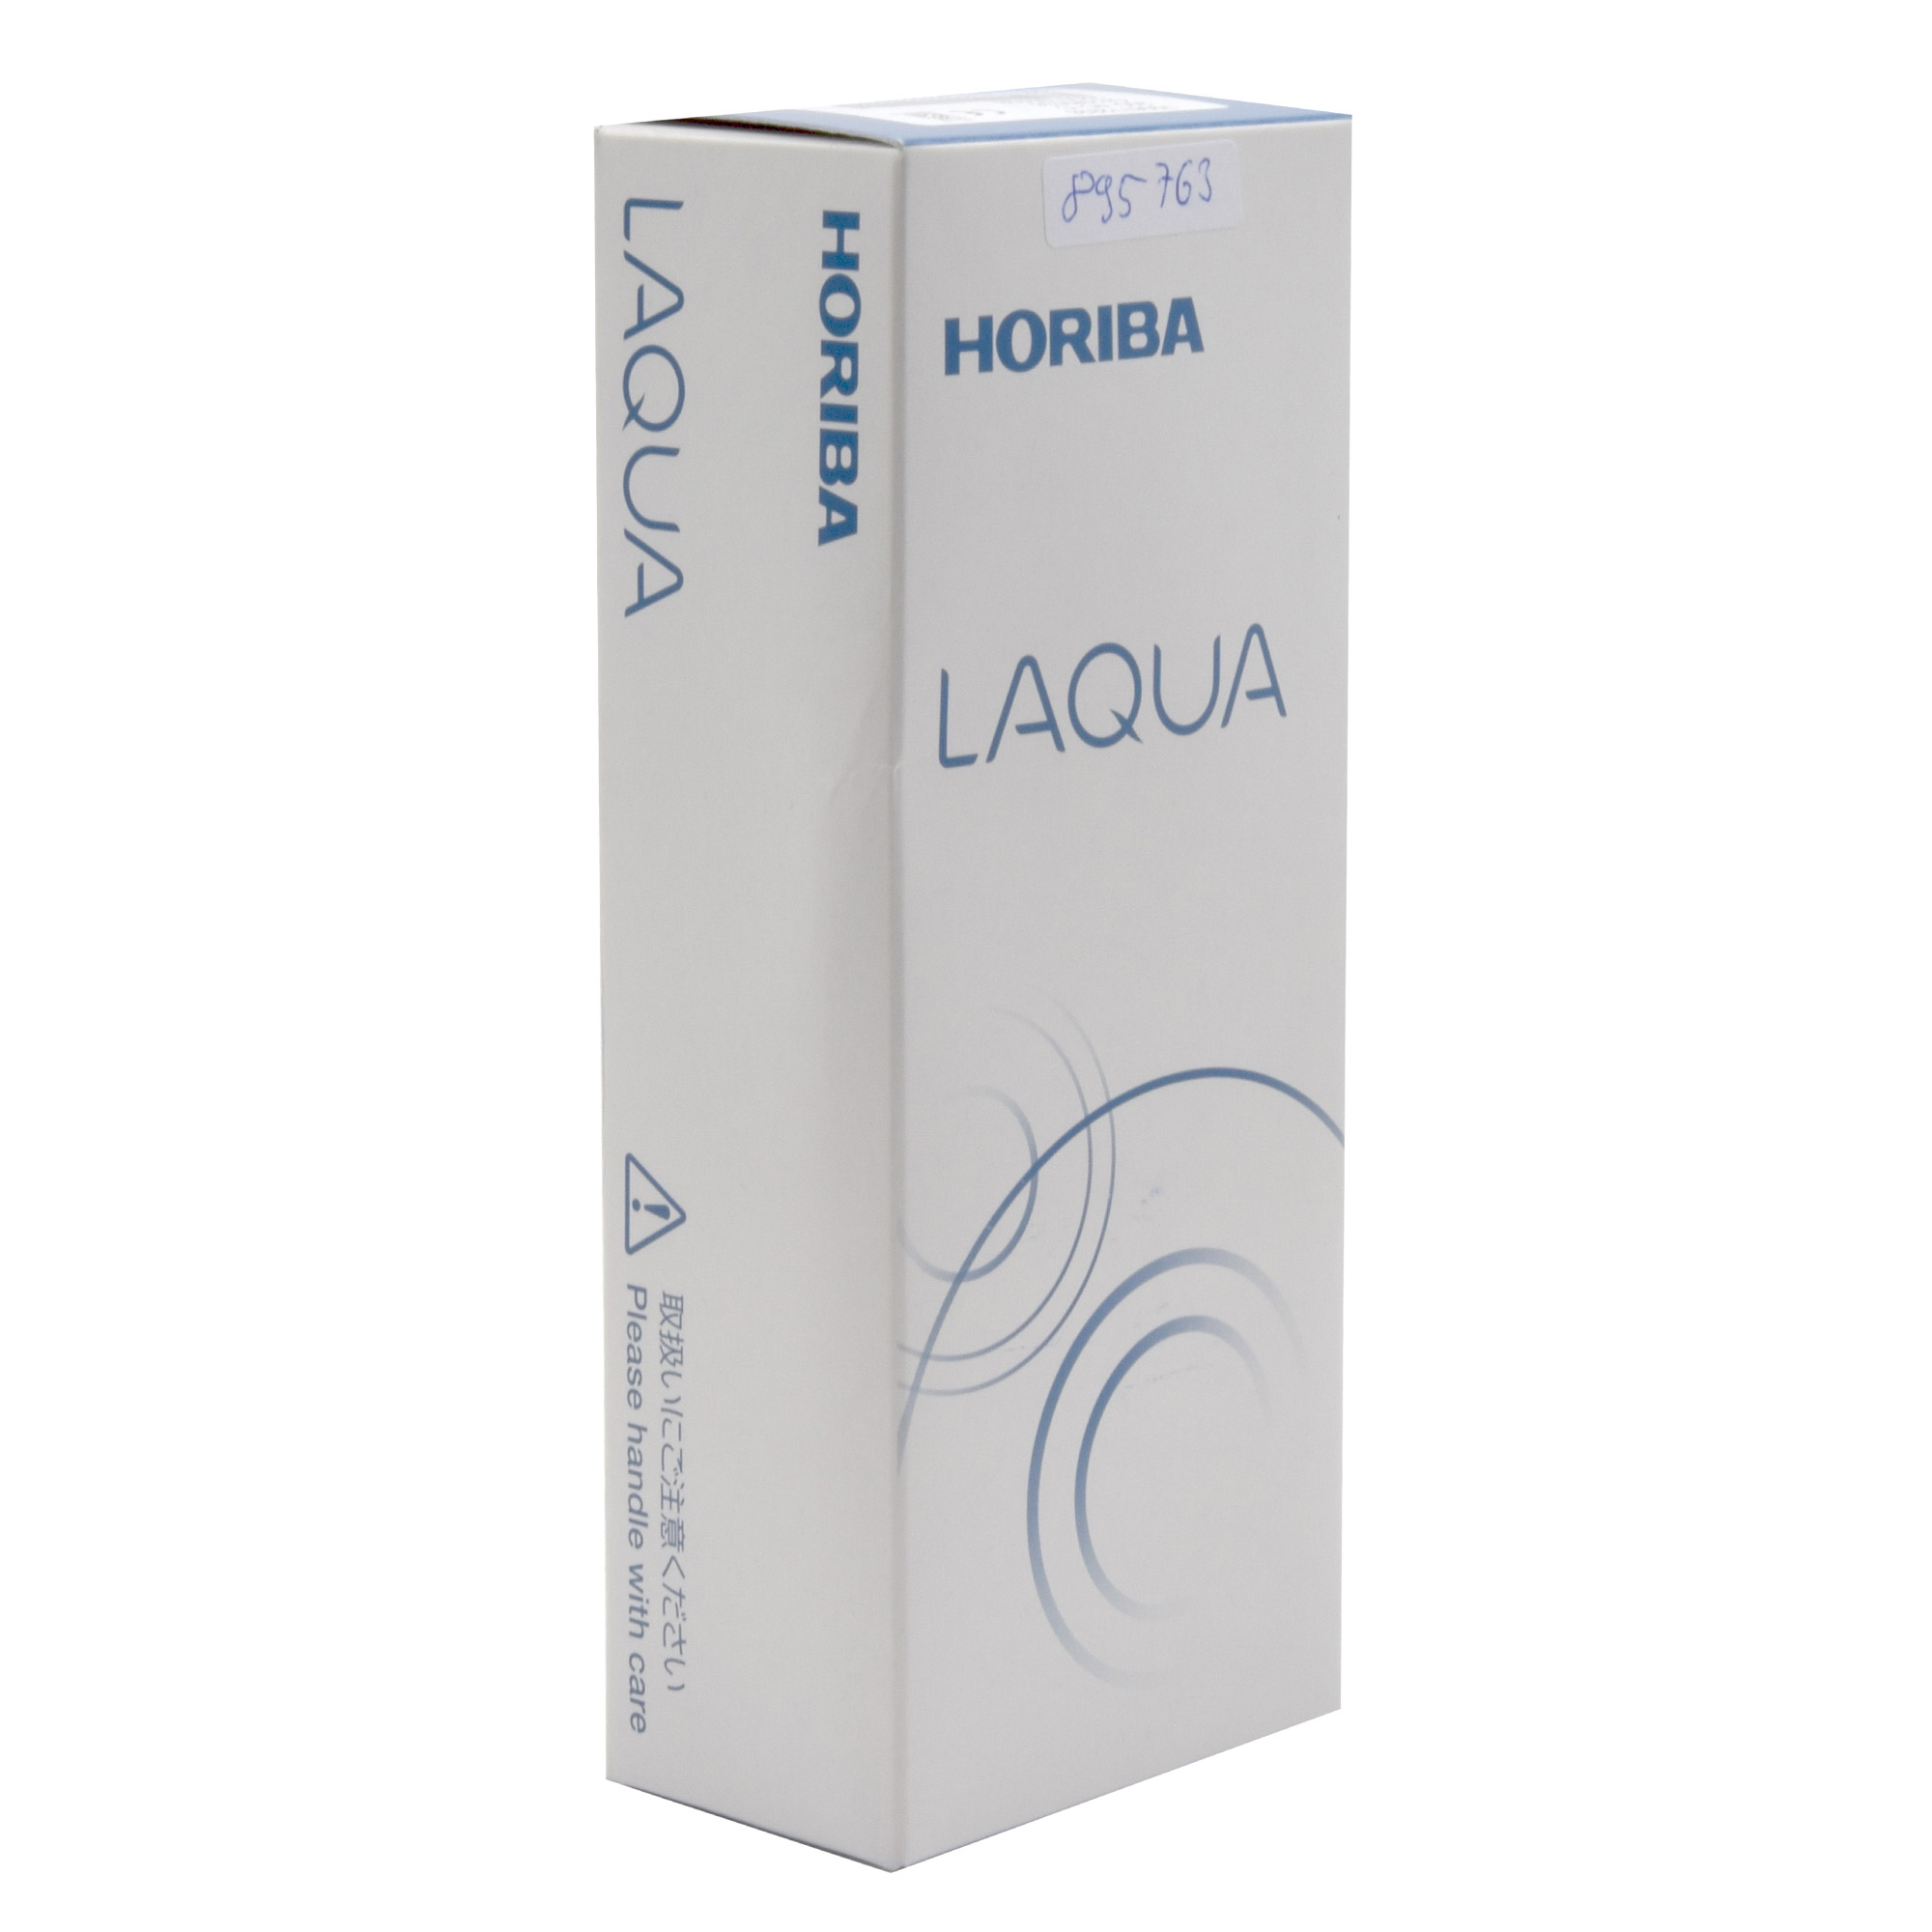 Horiba LAQUA 300-4C-C sensor for LAQUA 300 series